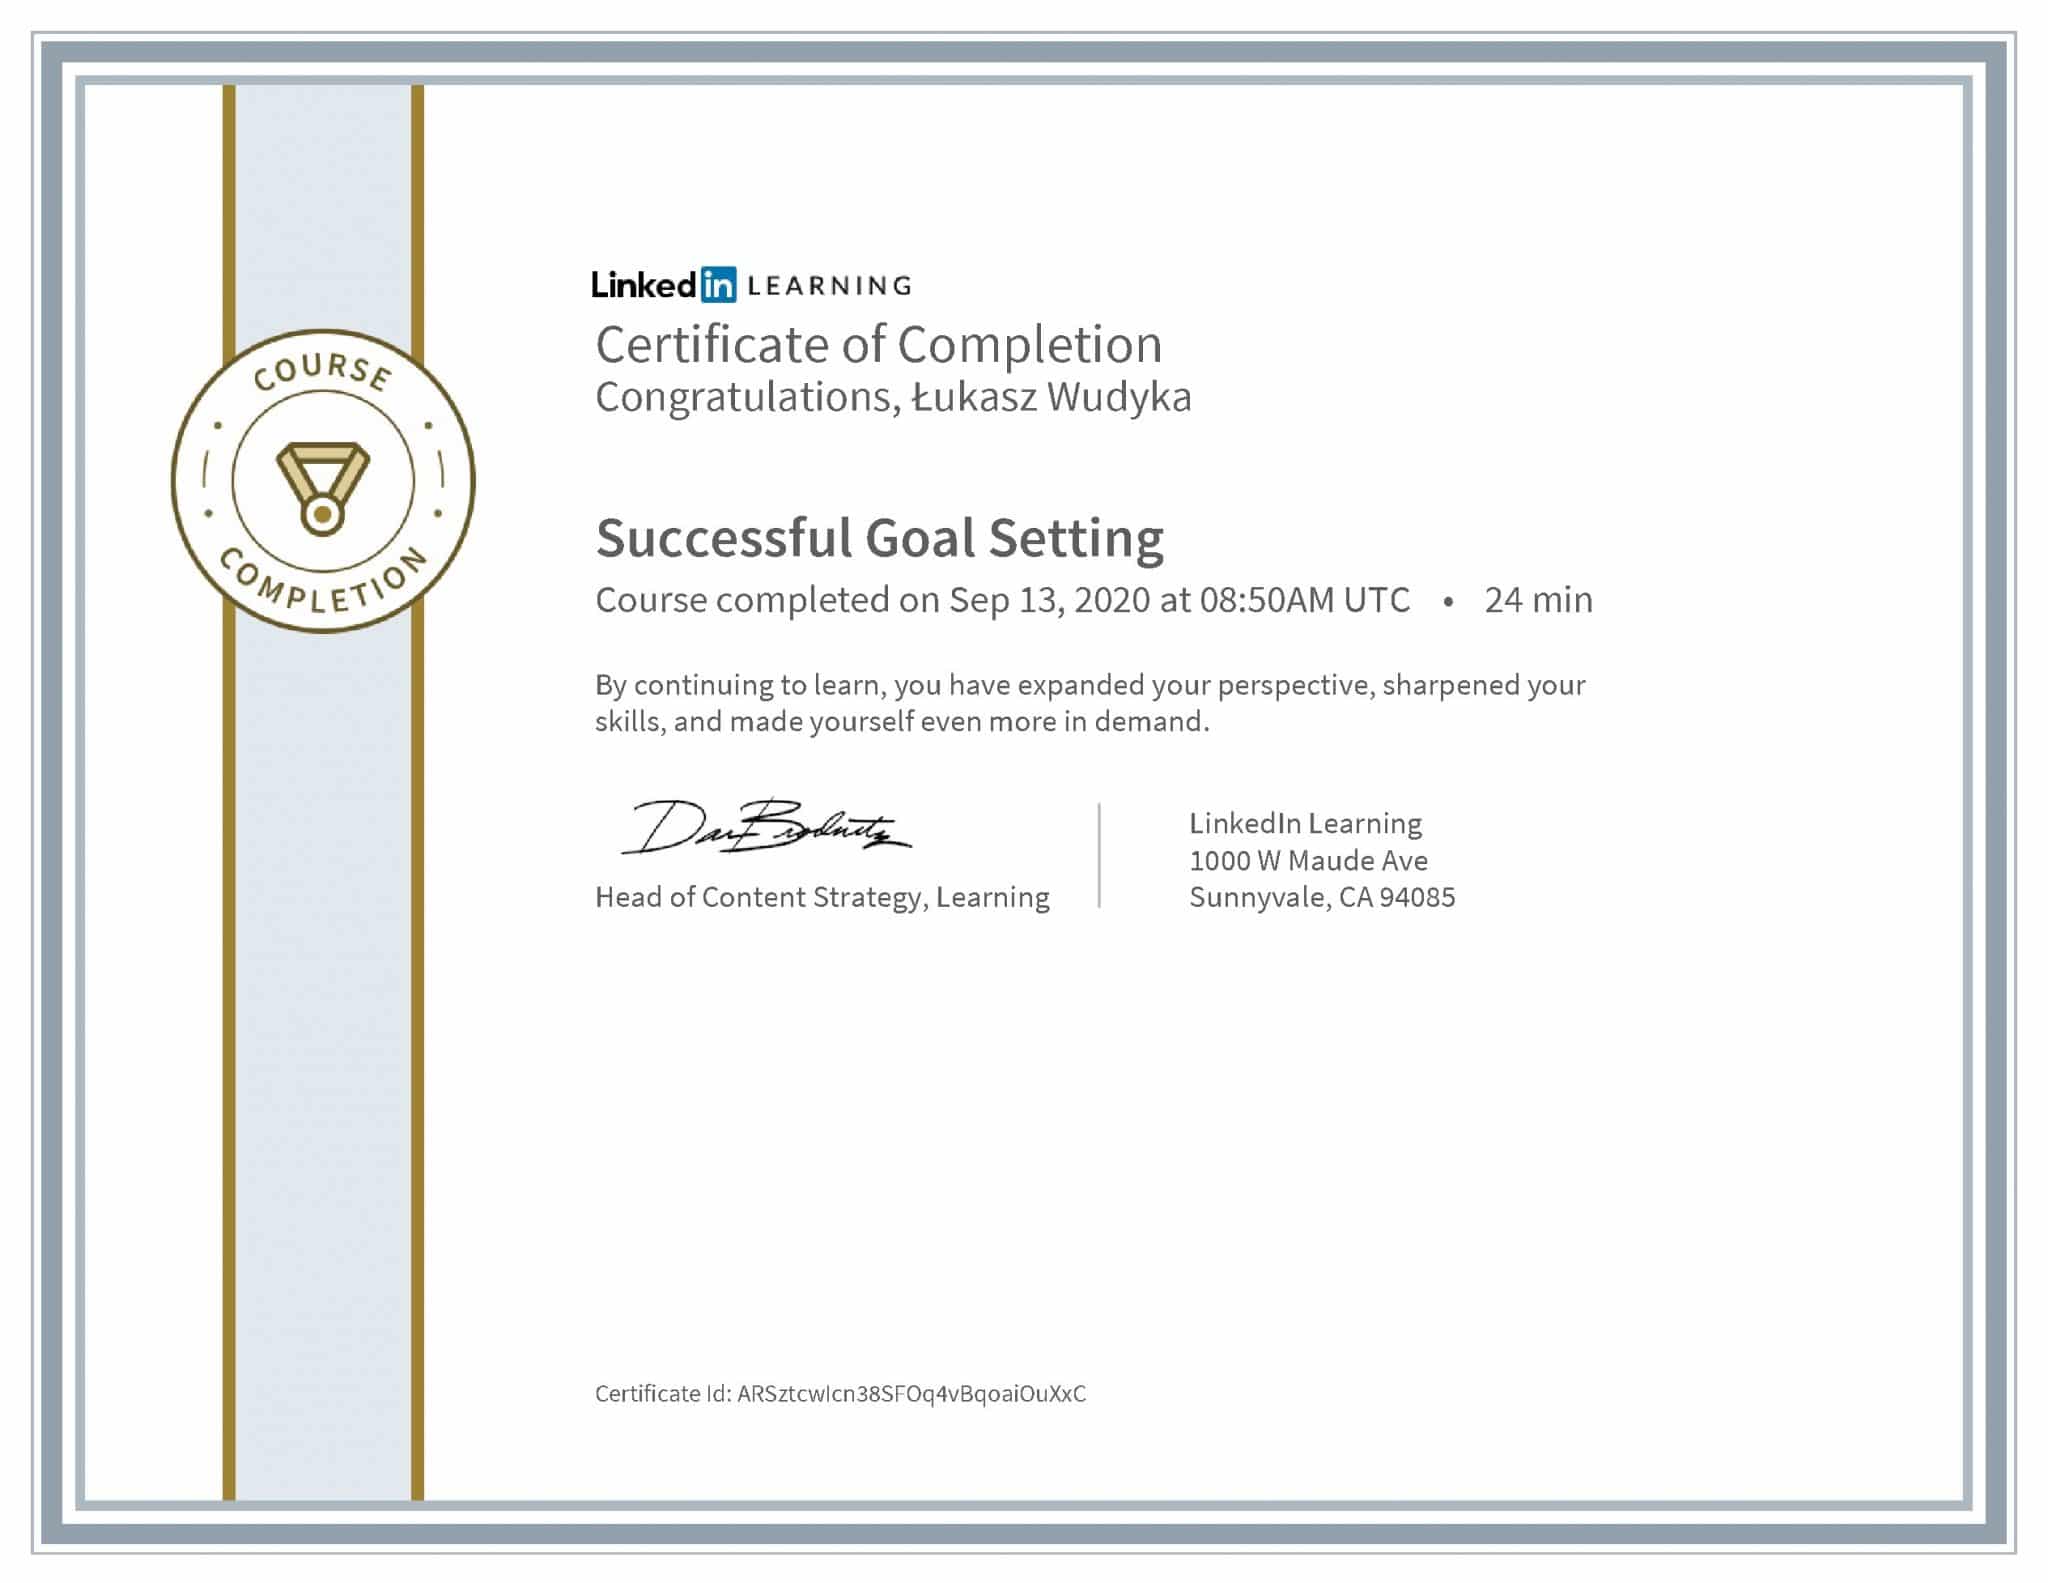 Łukasz Wudyka certyfikat LinkedIn Successful Goal Setting